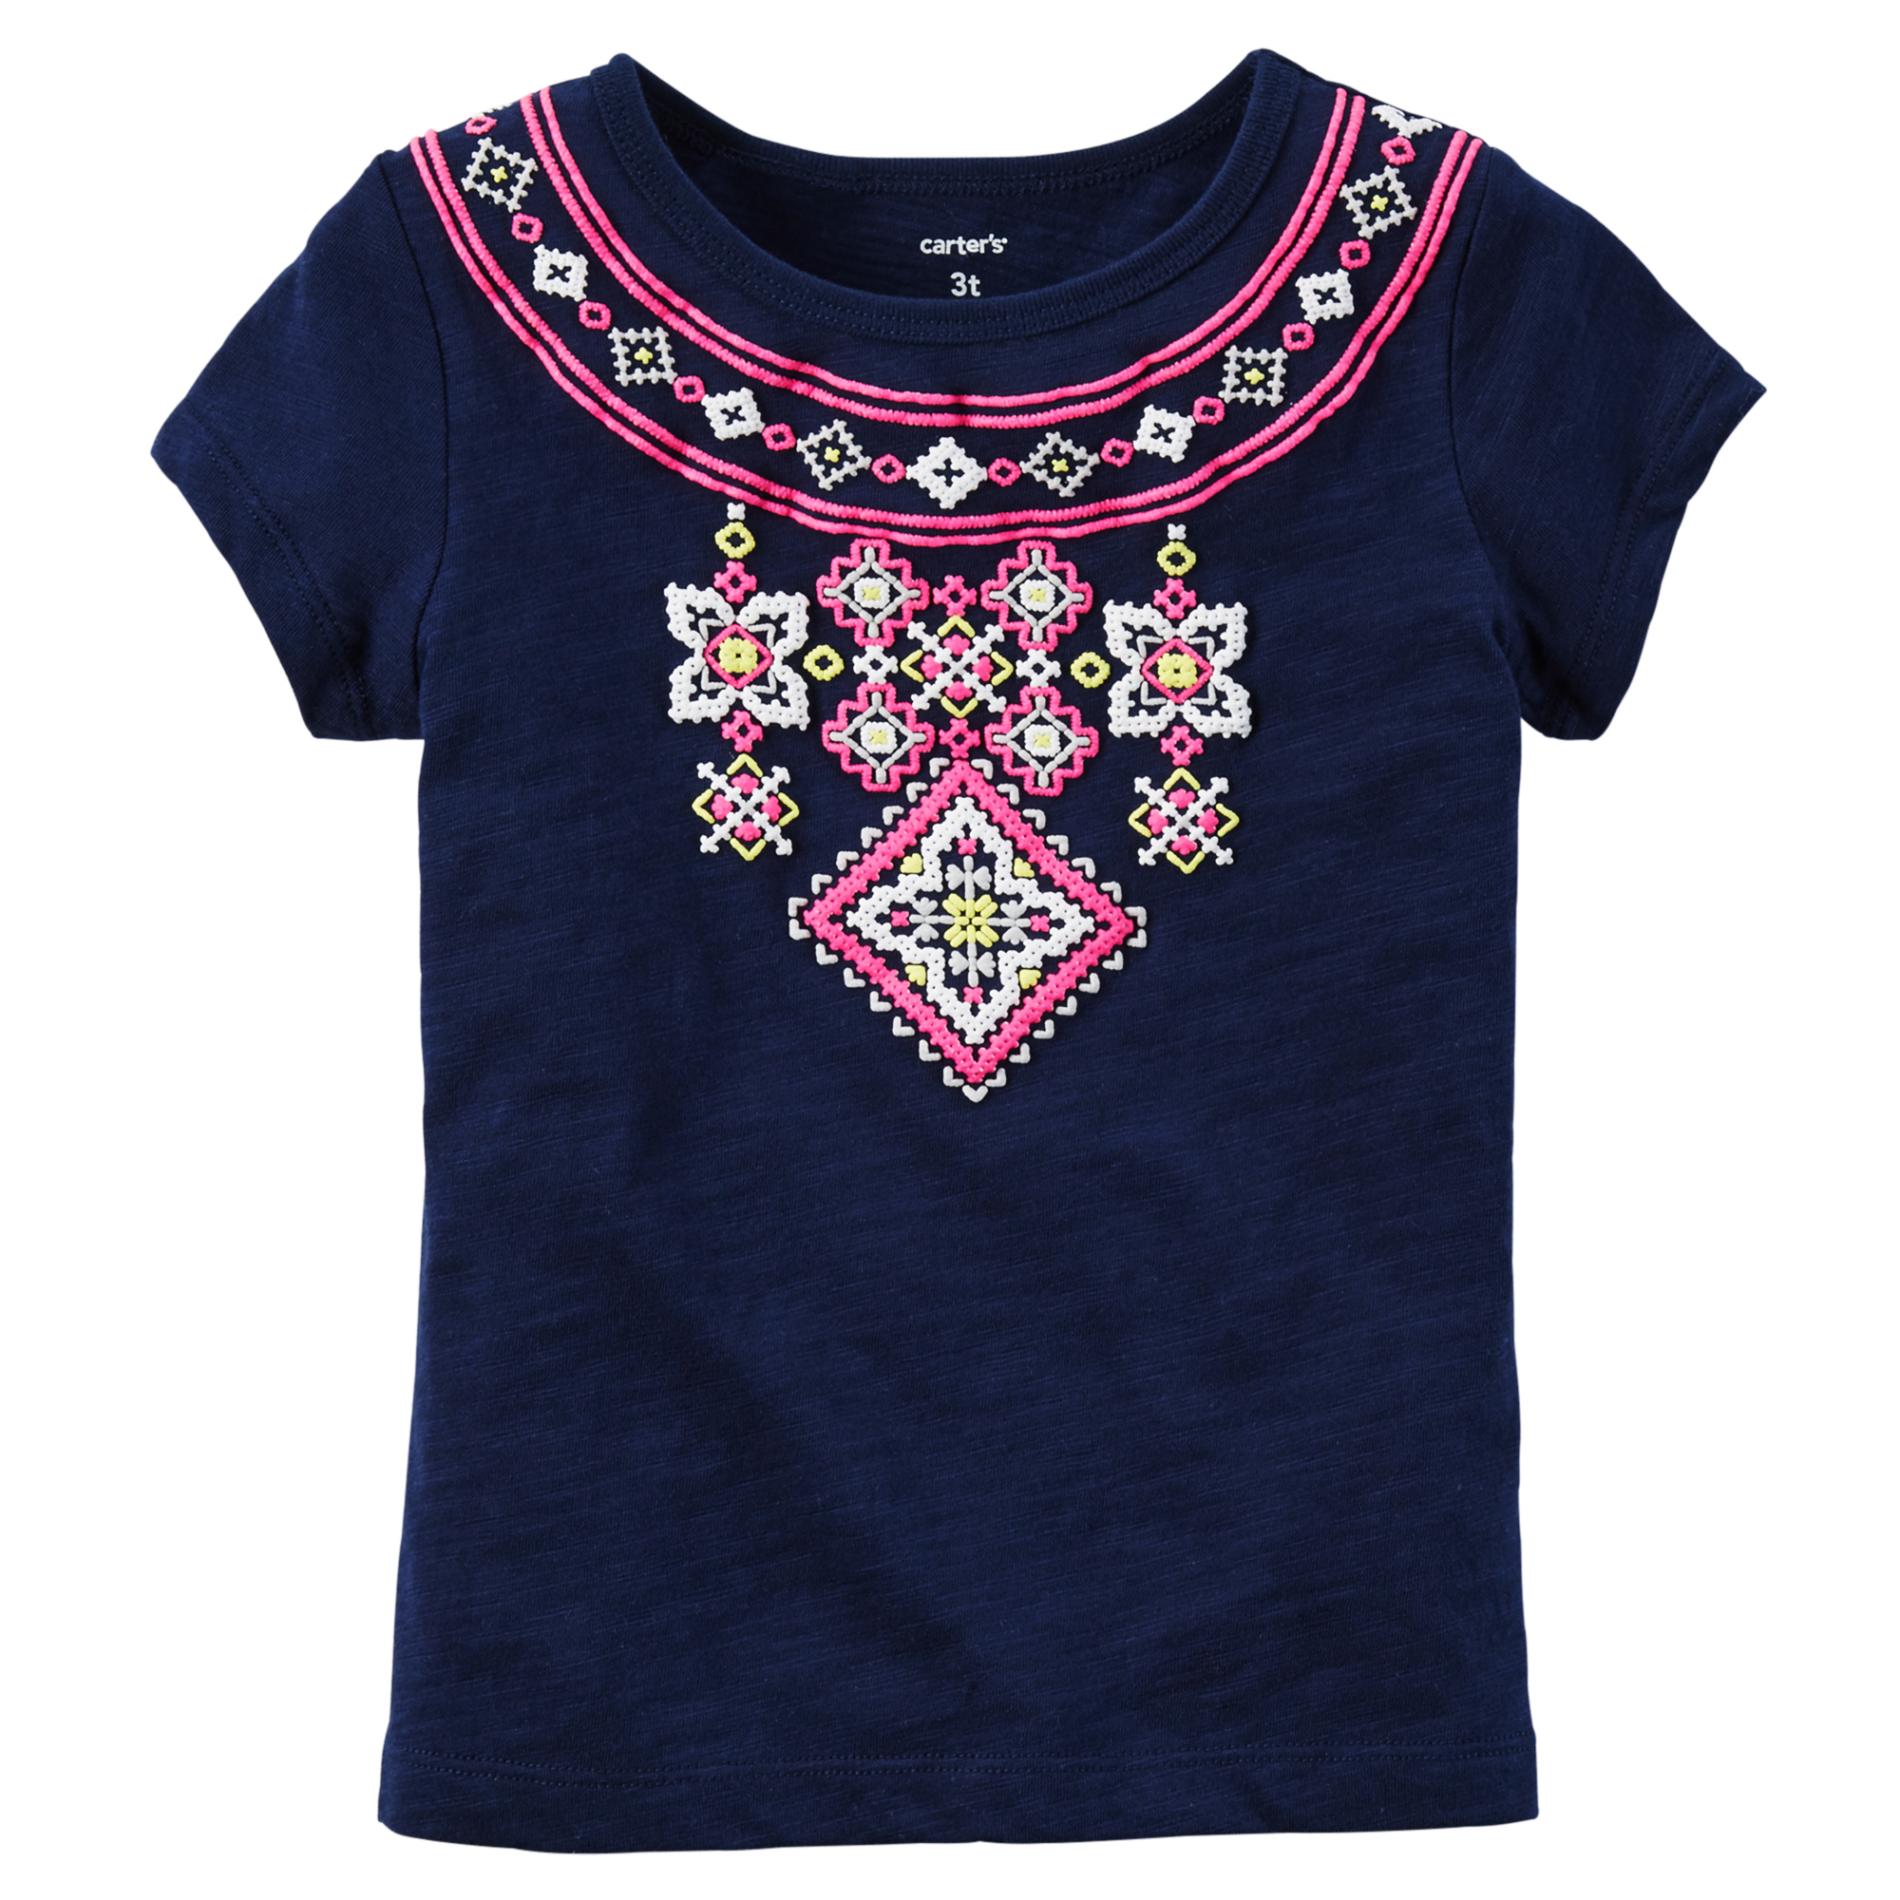 Carter's Toddler Girl's Embellished T-Shirt - Tribal